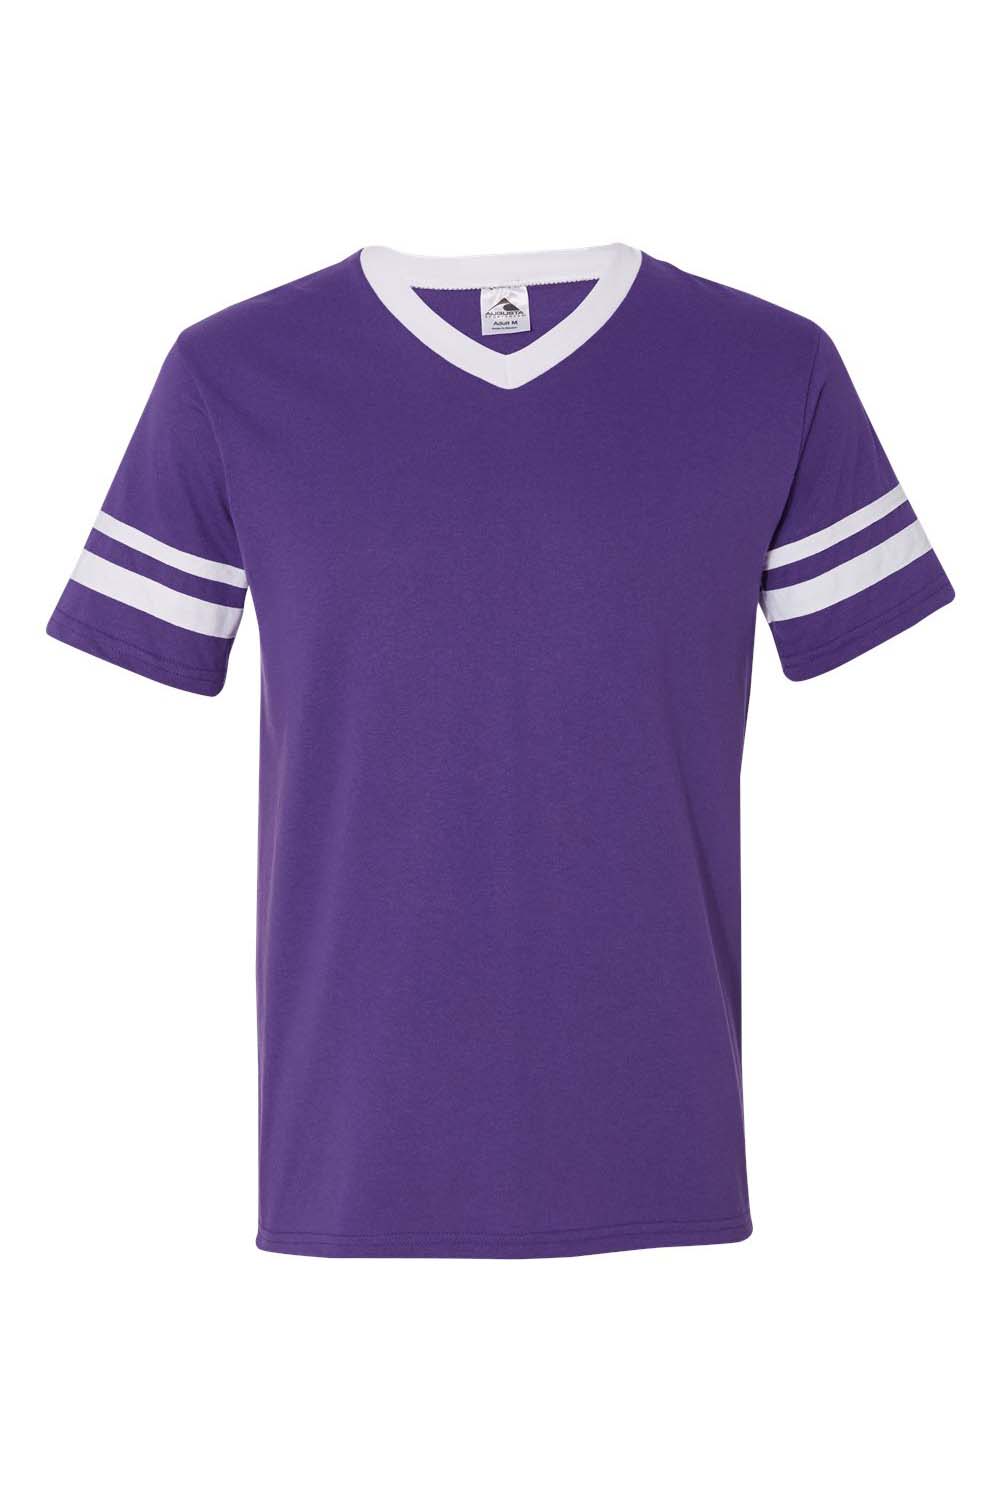 Augusta Sportswear 360 Mens Short Sleeve V-Neck T-Shirt Purple/White Model Flat Front